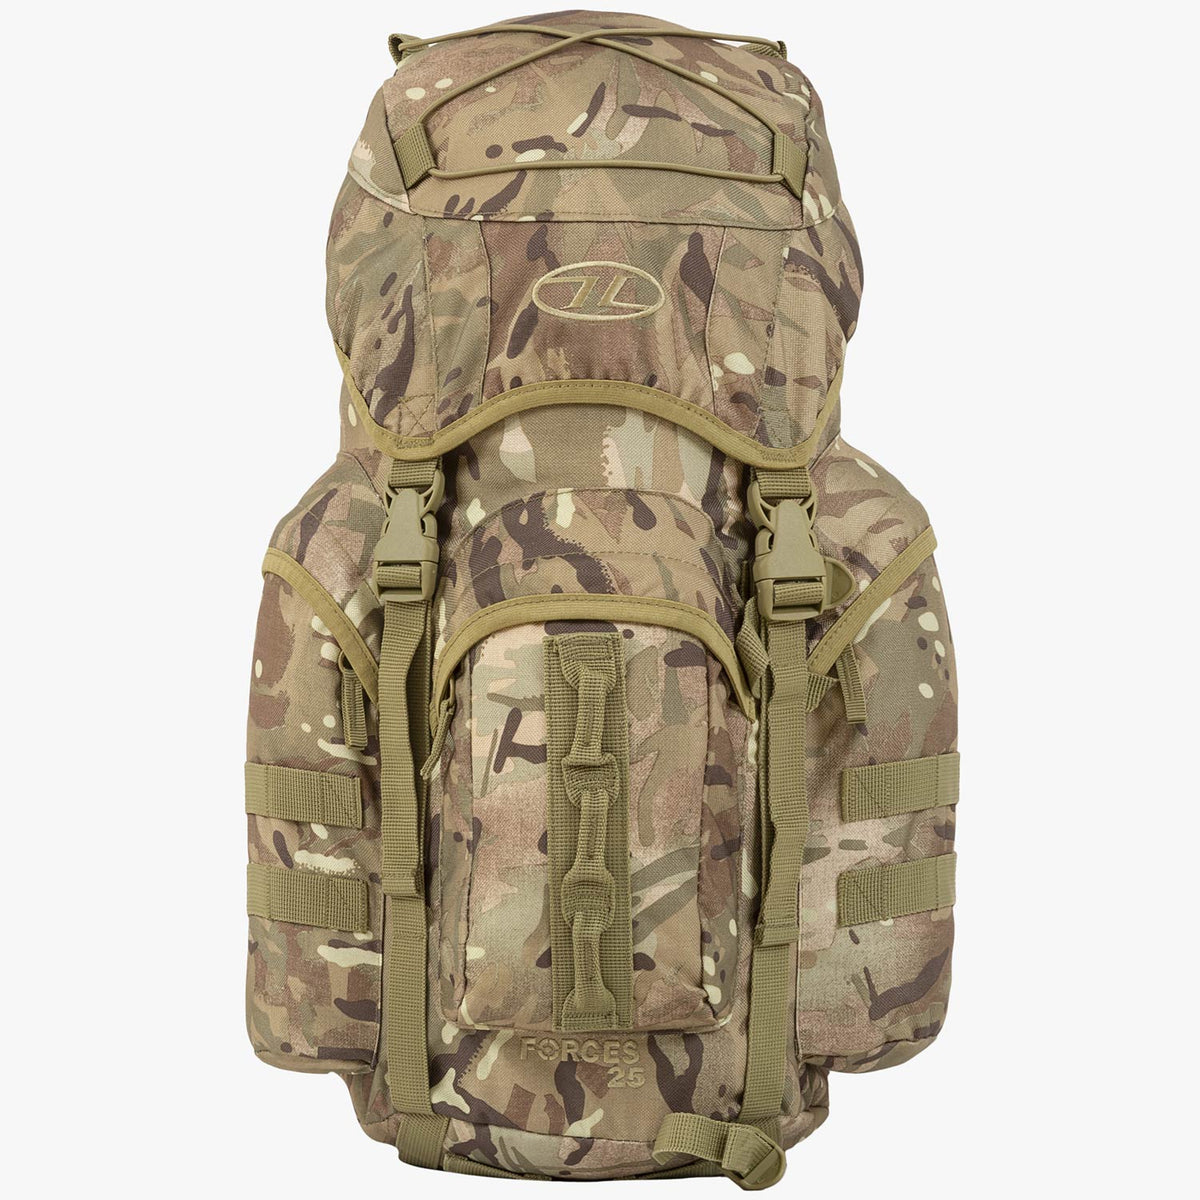 Highlander Cerberus Pack Military Assault Backpack Army MOLLE Rucksack 30L  Black